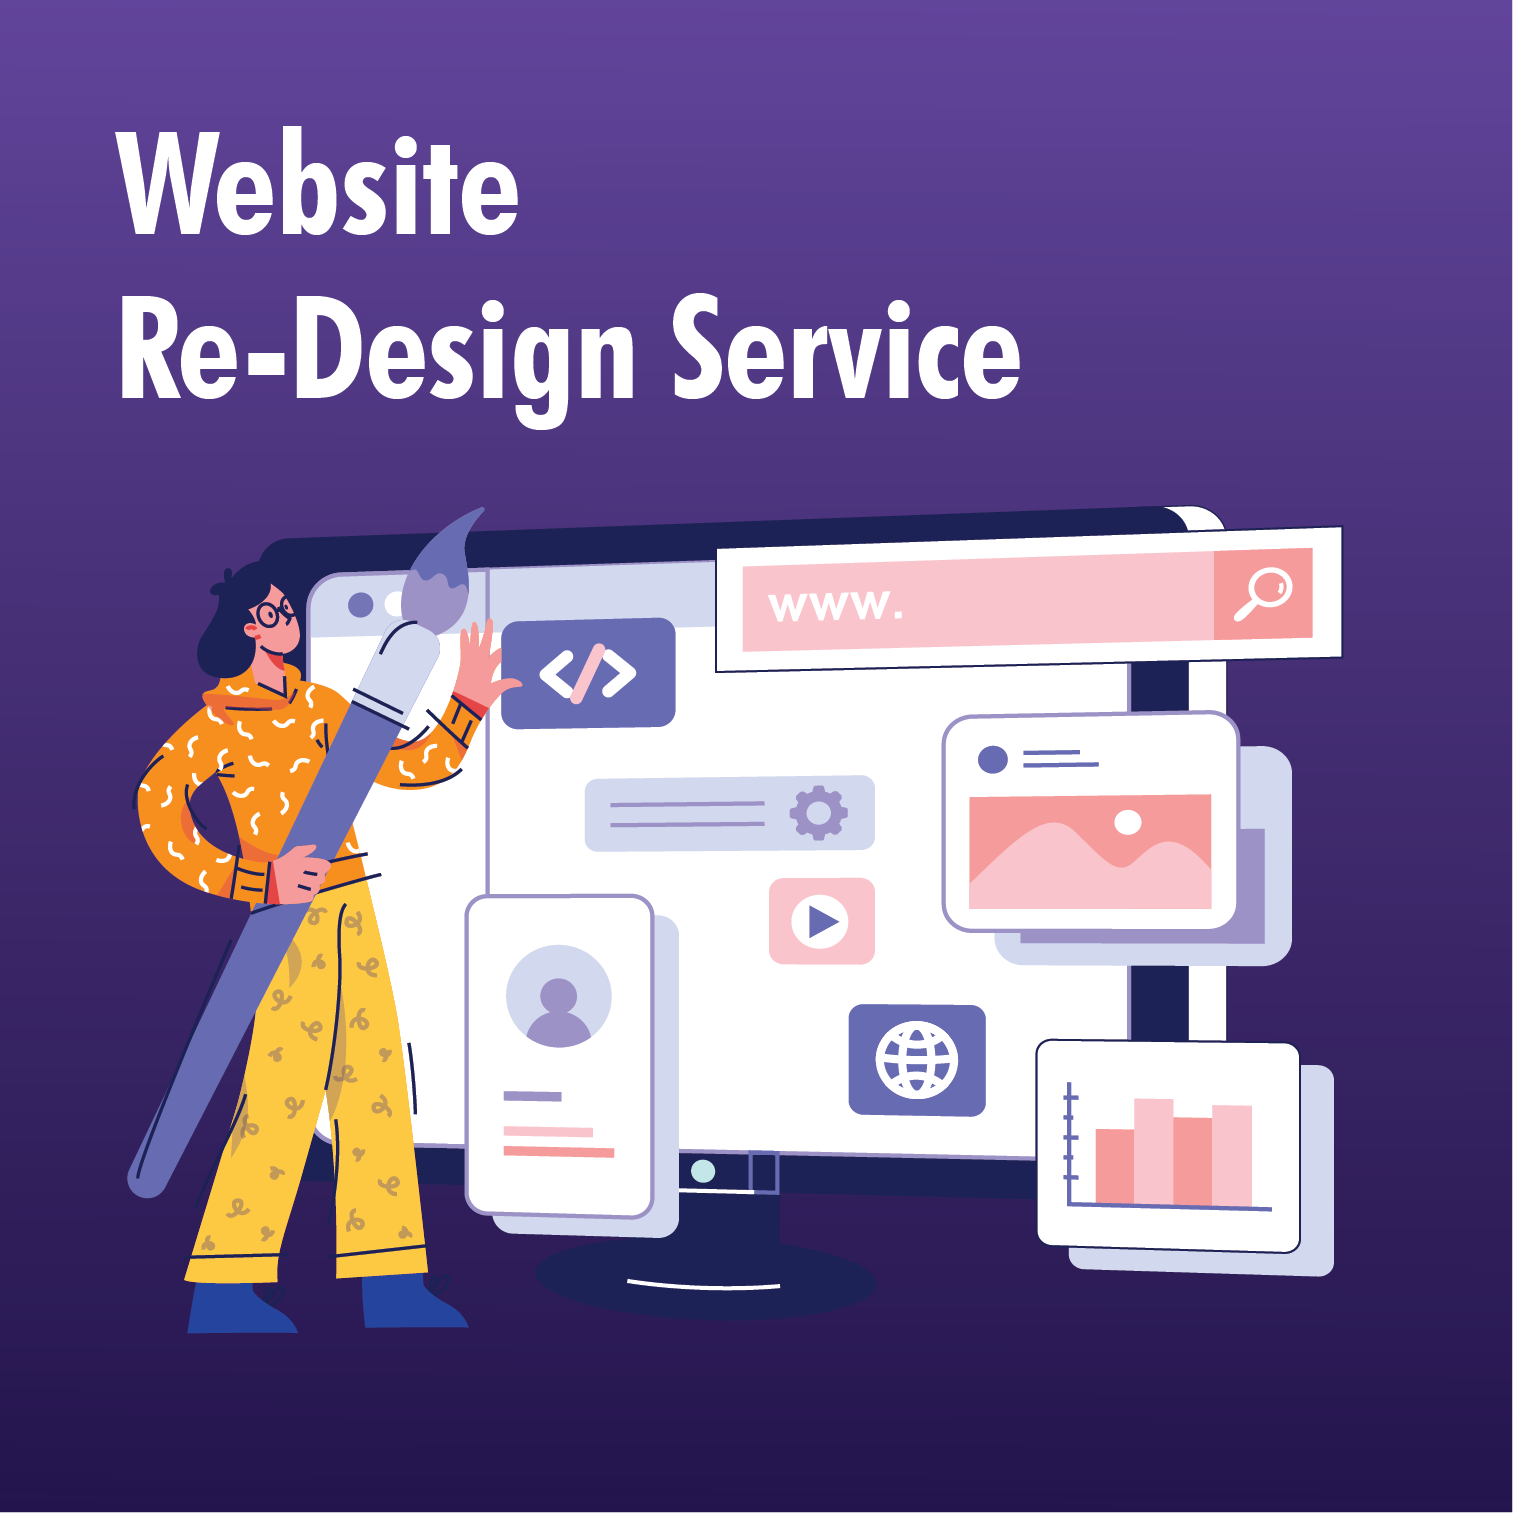 Website Re-Design Services